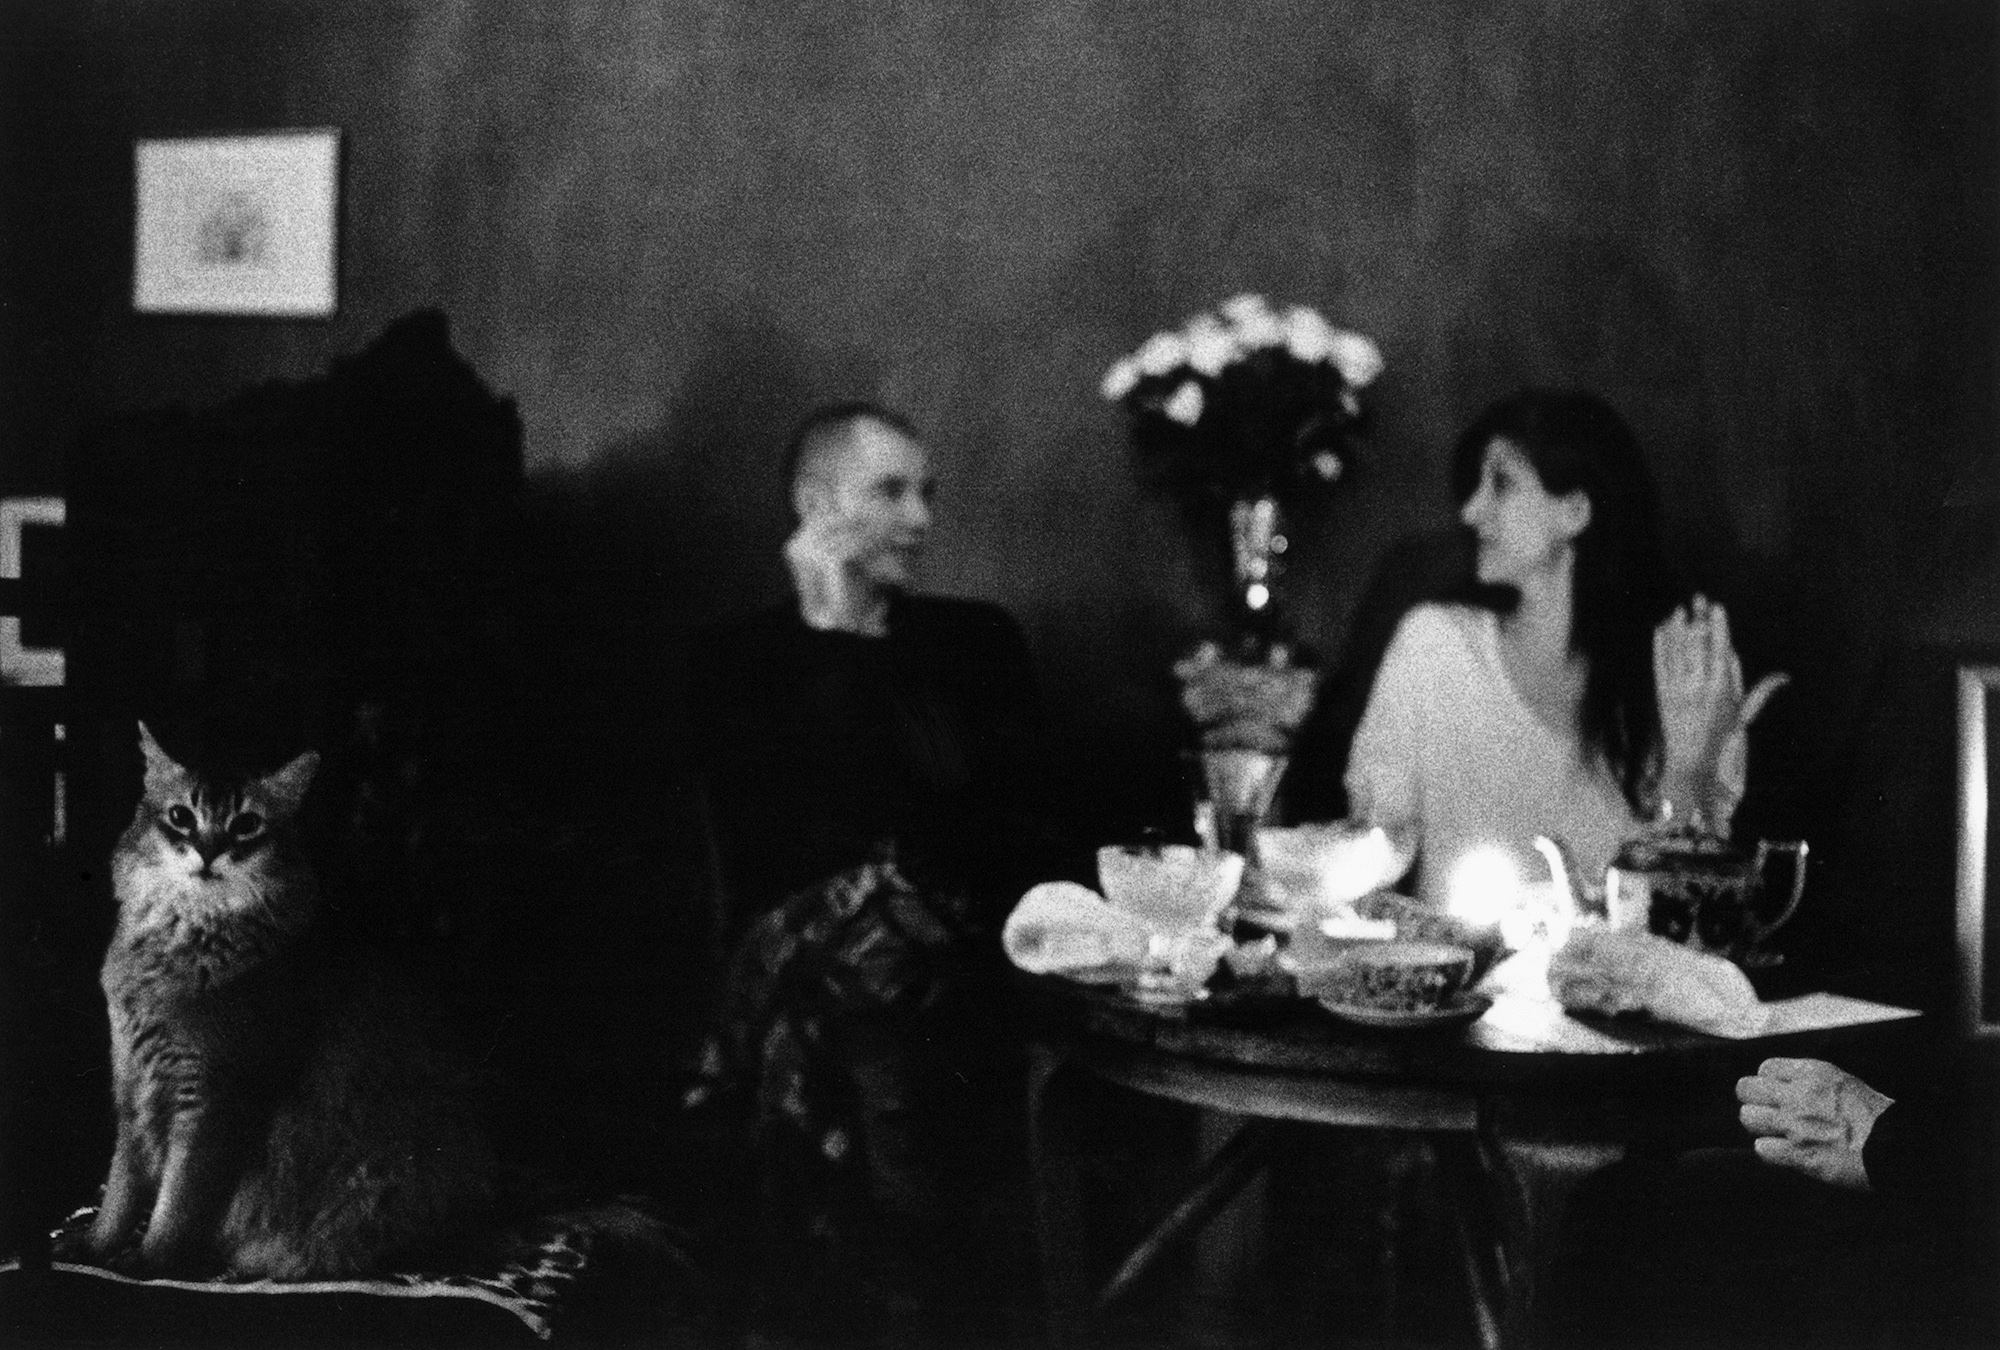 Achilles, Frank and Linda, New York, 1995